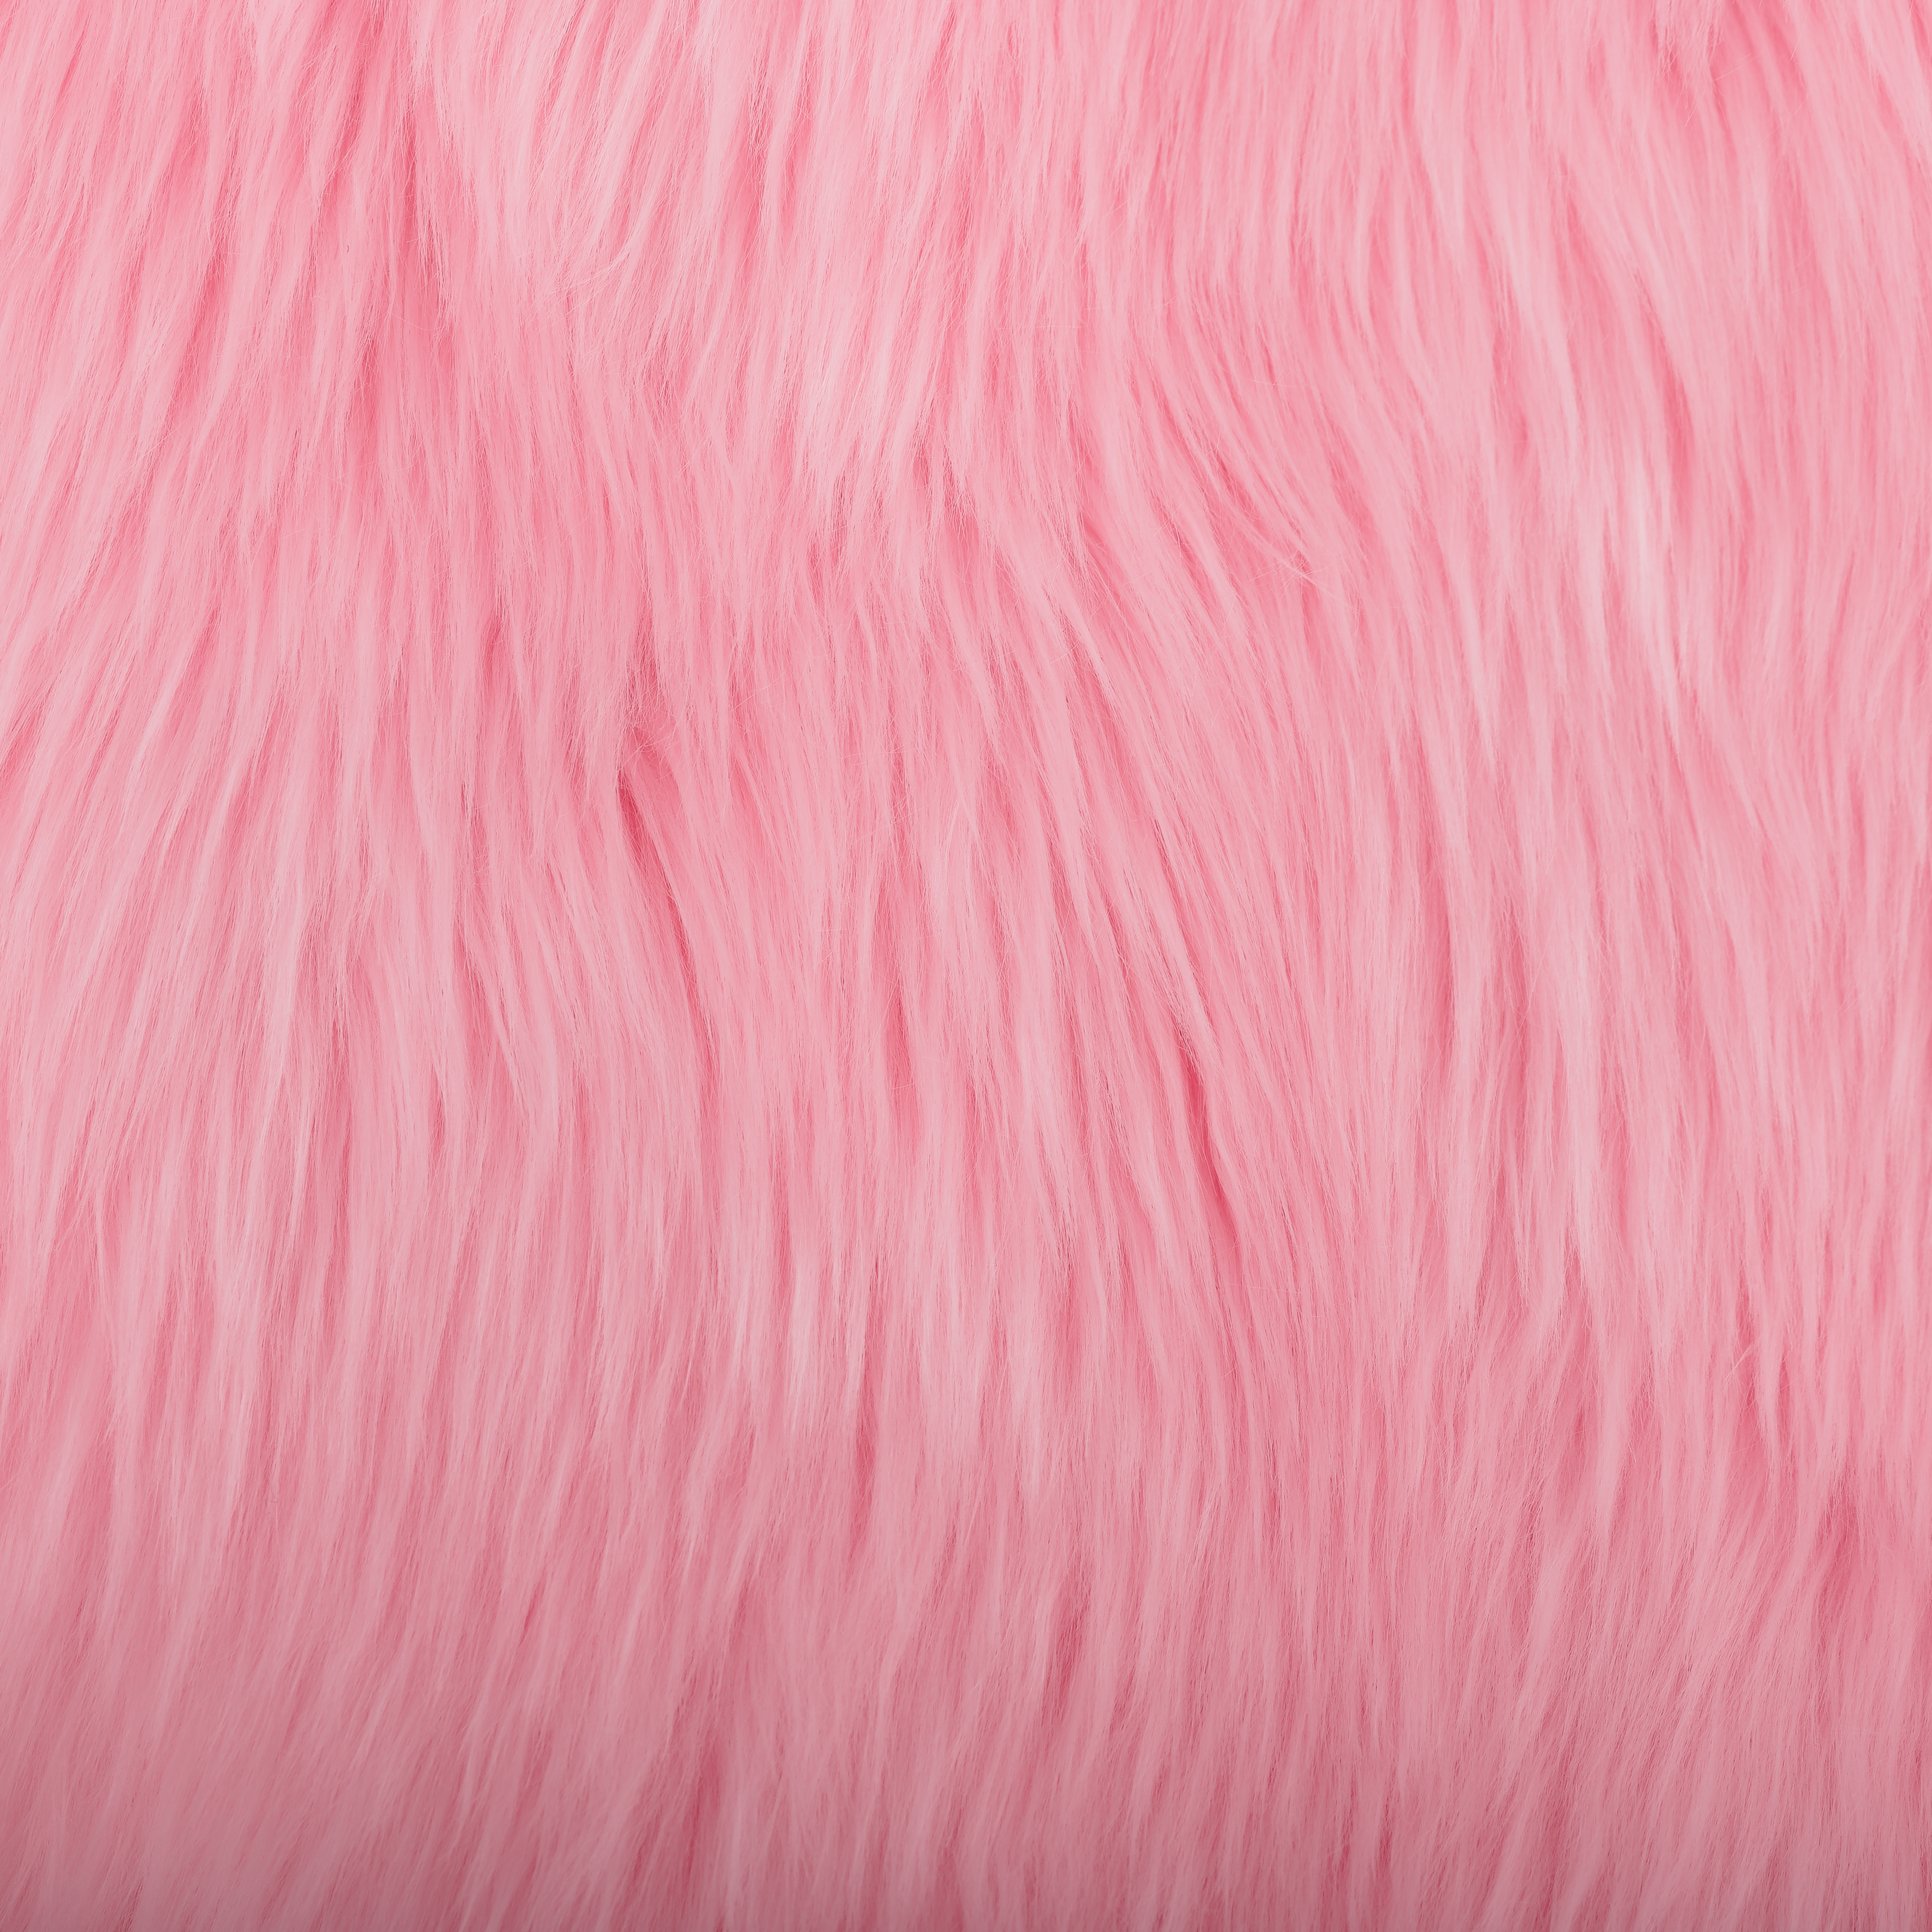 Pink Fur Fabric- Craft Fursuit Fur, Furry Fabric Shag Faux Fur For